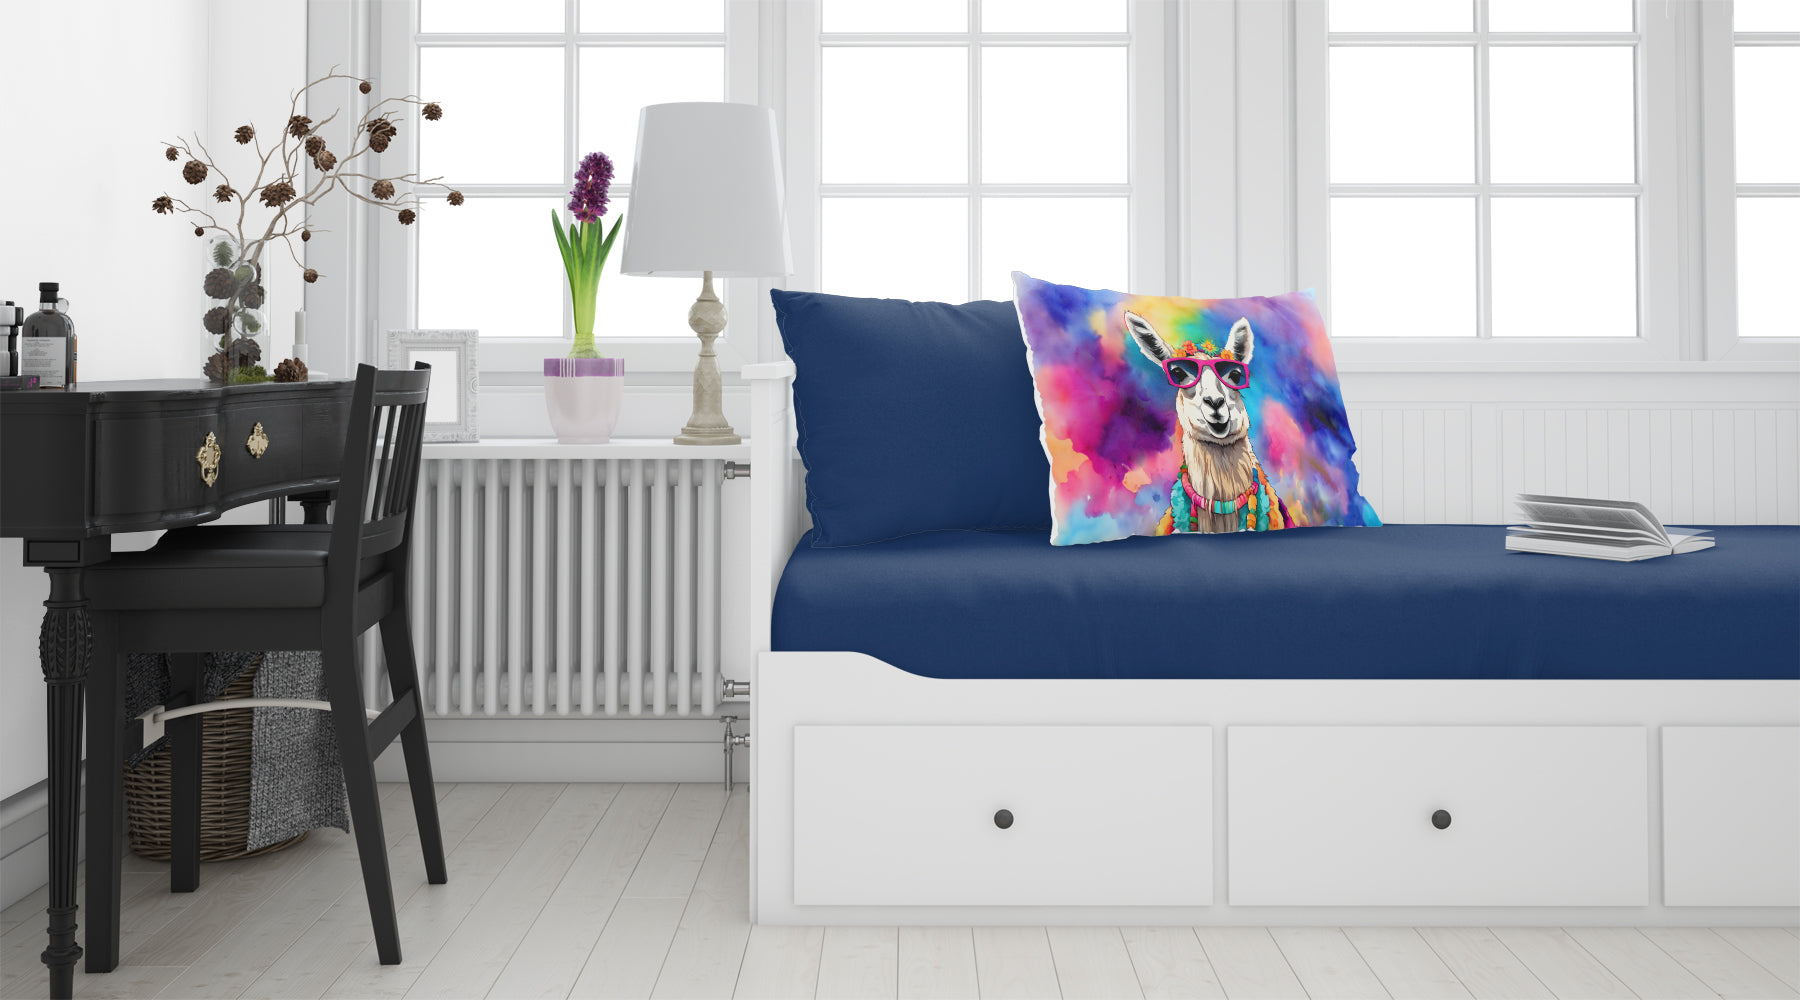 Buy this Hippie Animal Llama Standard Pillowcase